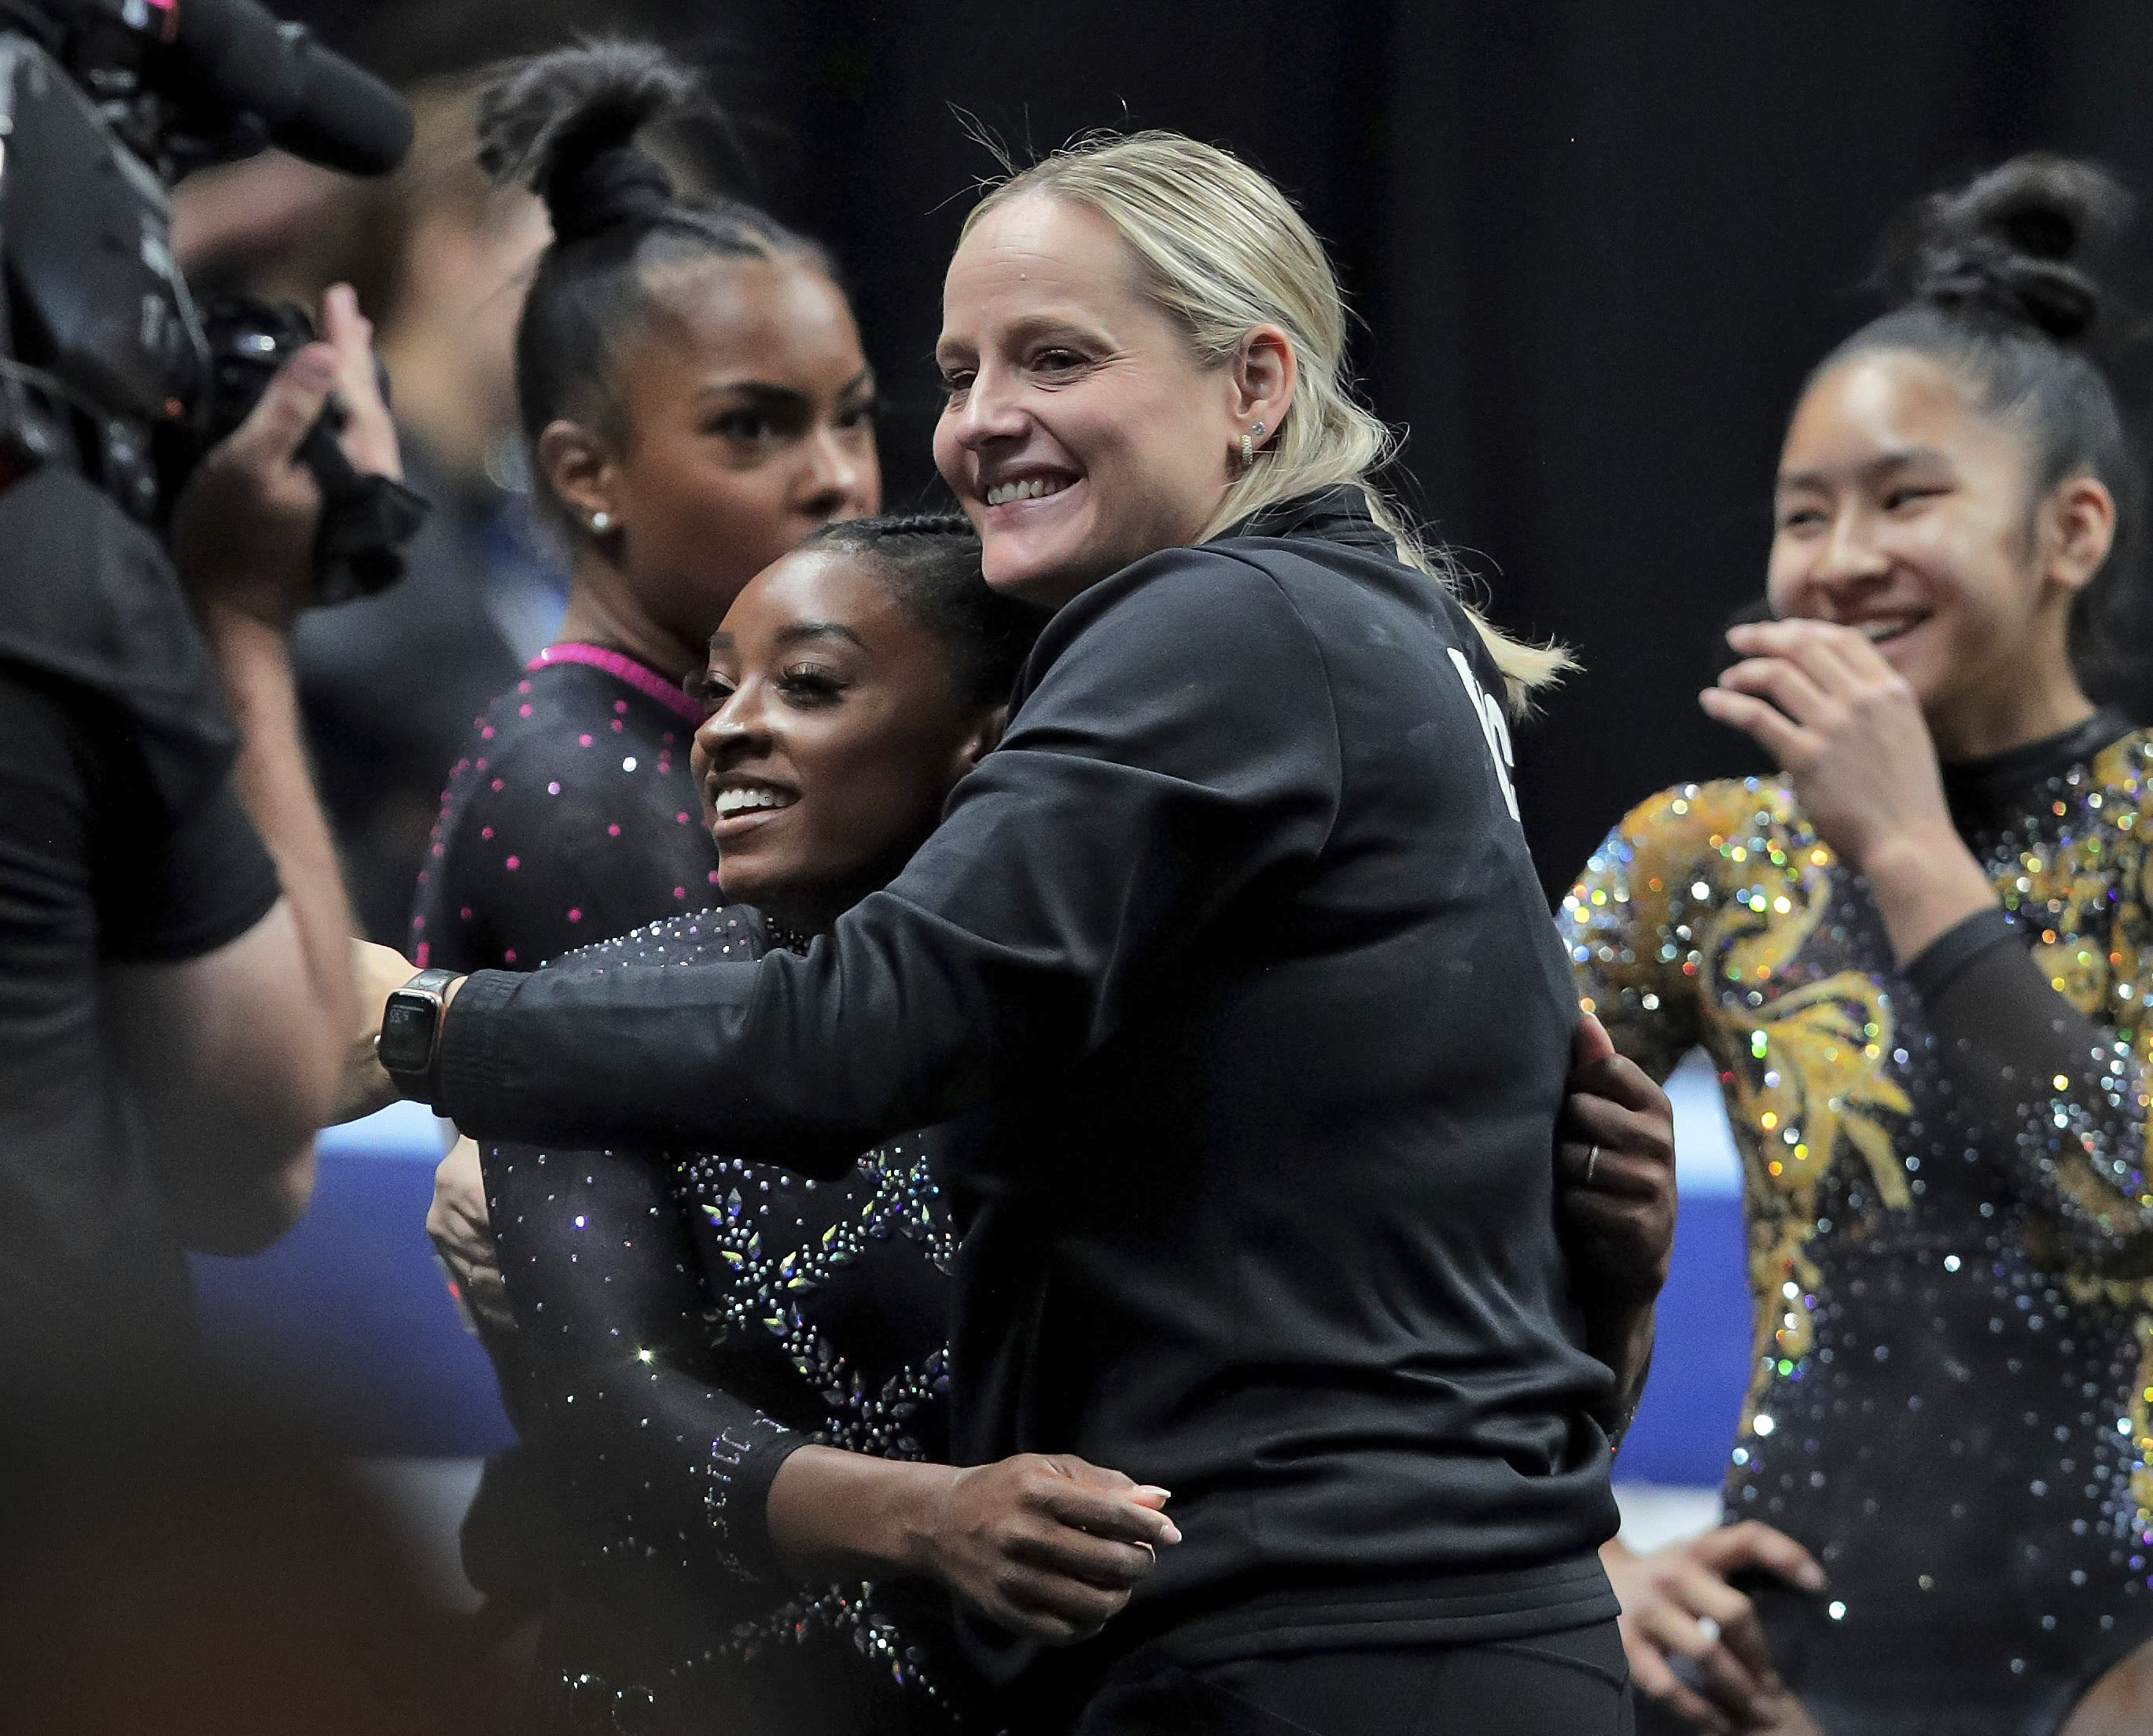 Georgia tabs Cecile Landi, Simone Biles' longtime coach, as co-head coach of women's gymnastics team